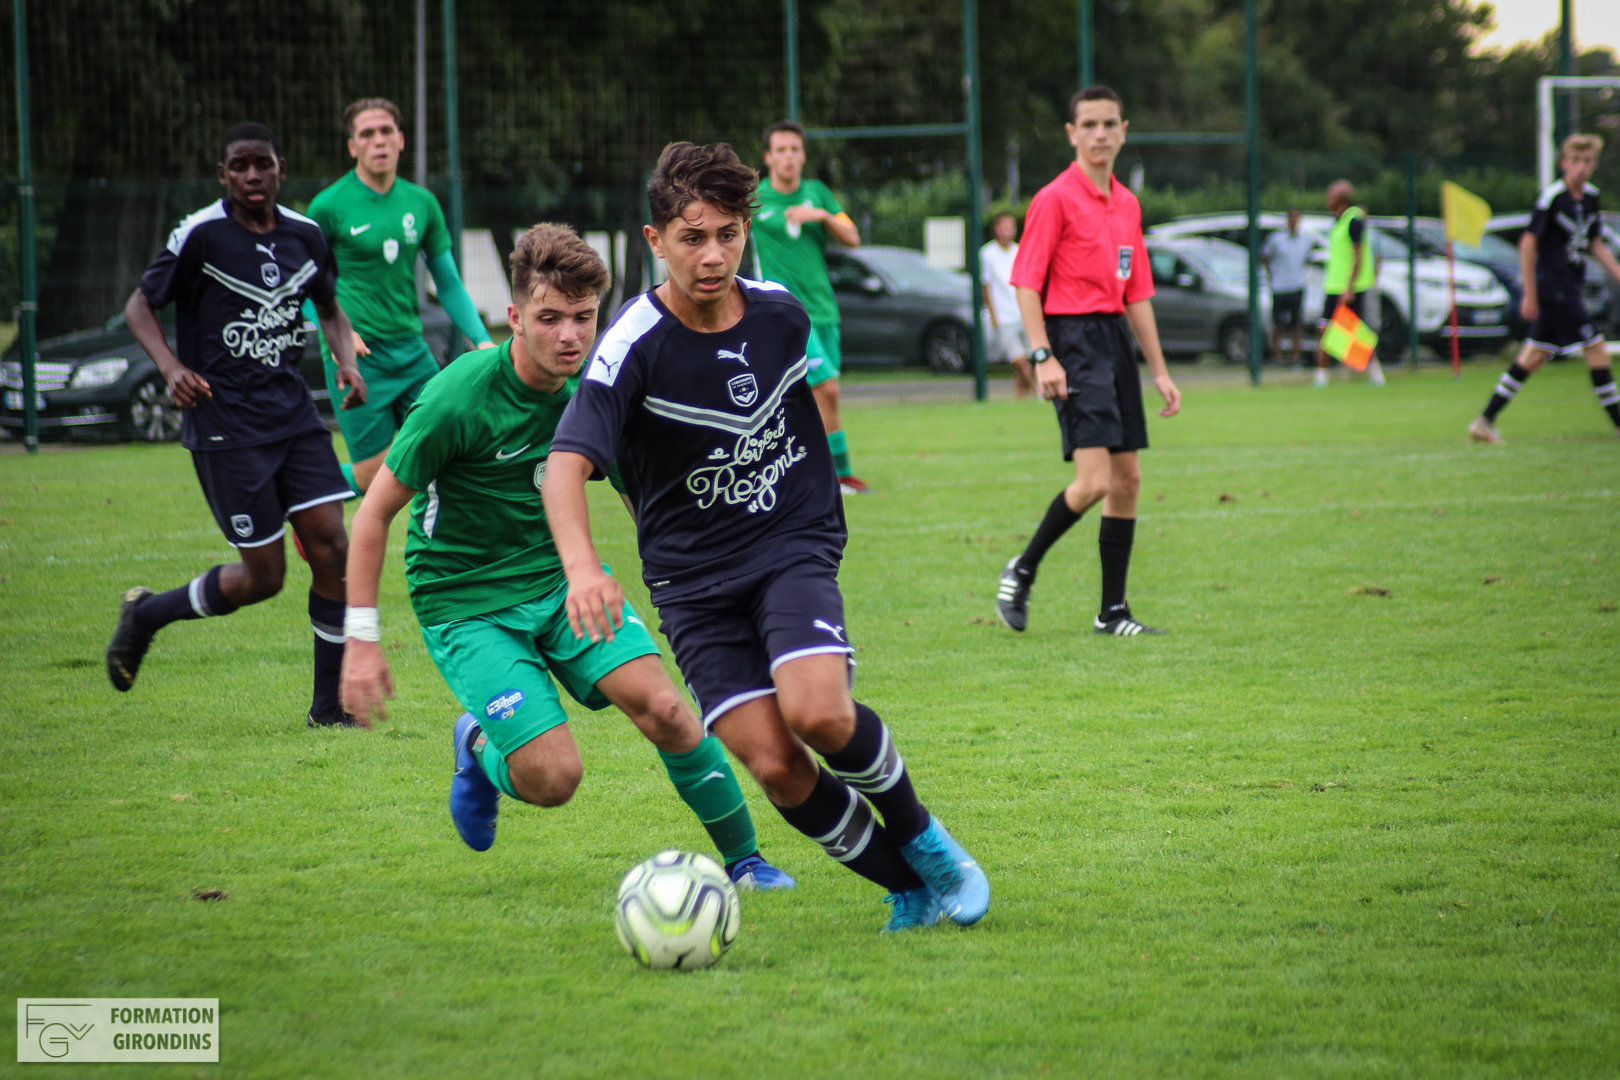 Cfa Girondins : Les U17 R1 battent les U19 de Bergerac en amical - Formation Girondins 